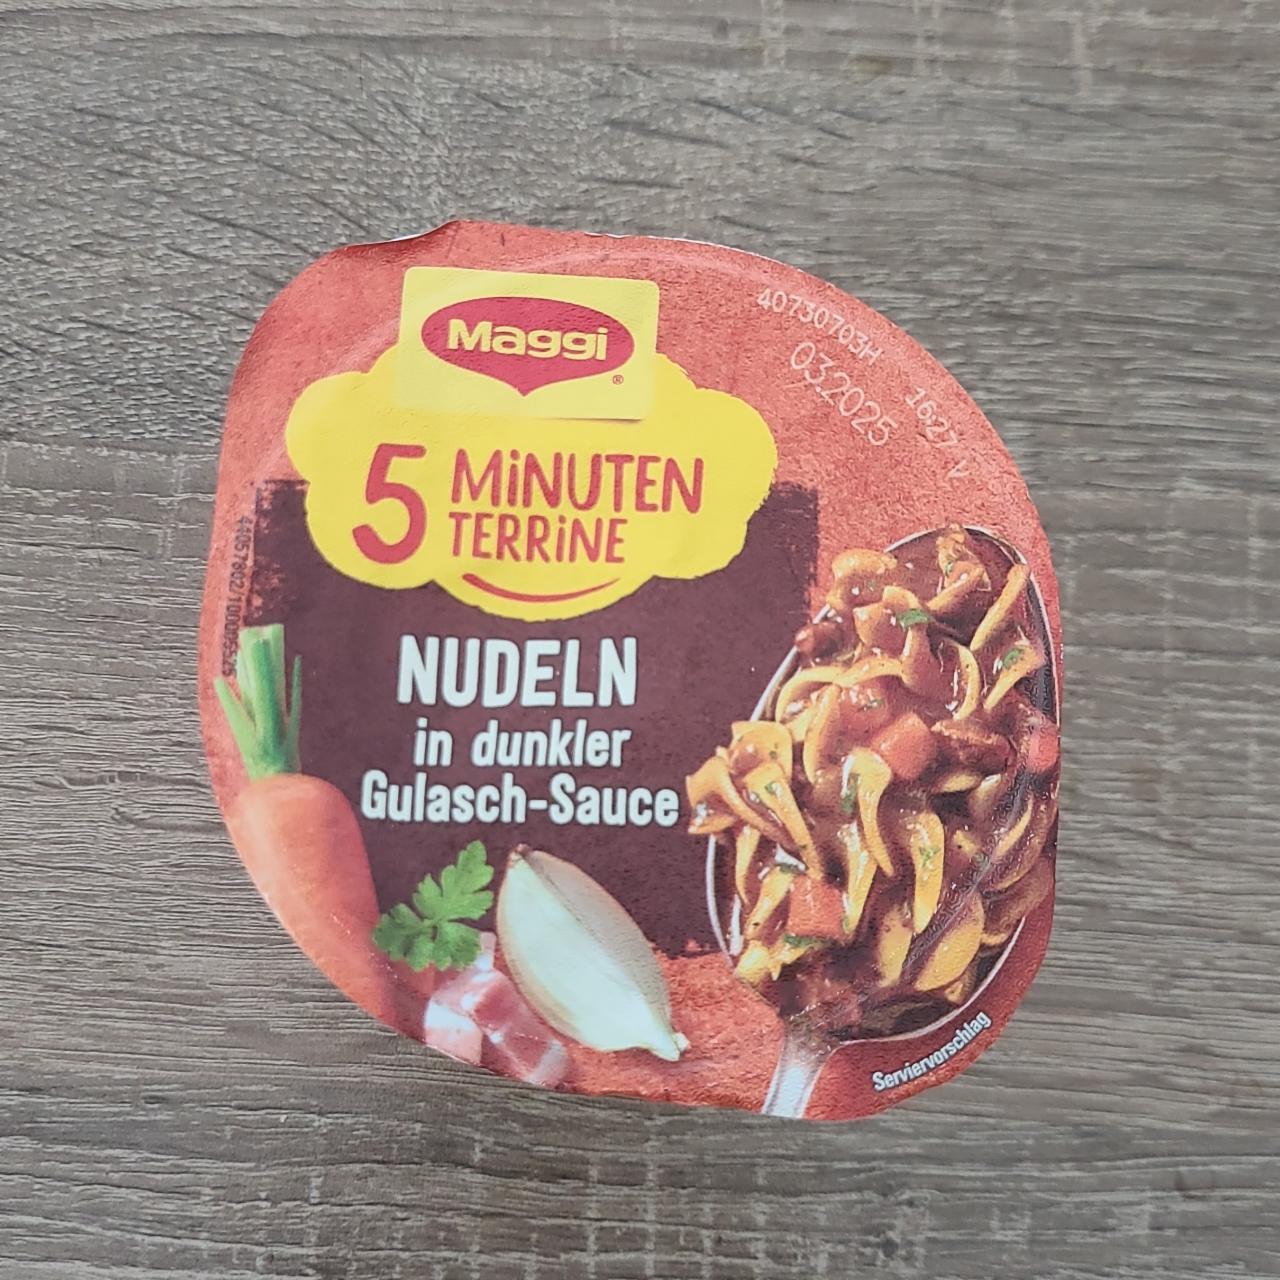 Фото - 5 Minuten Terrine Nudeln in dunkler Gulasch-Sauce Maggi